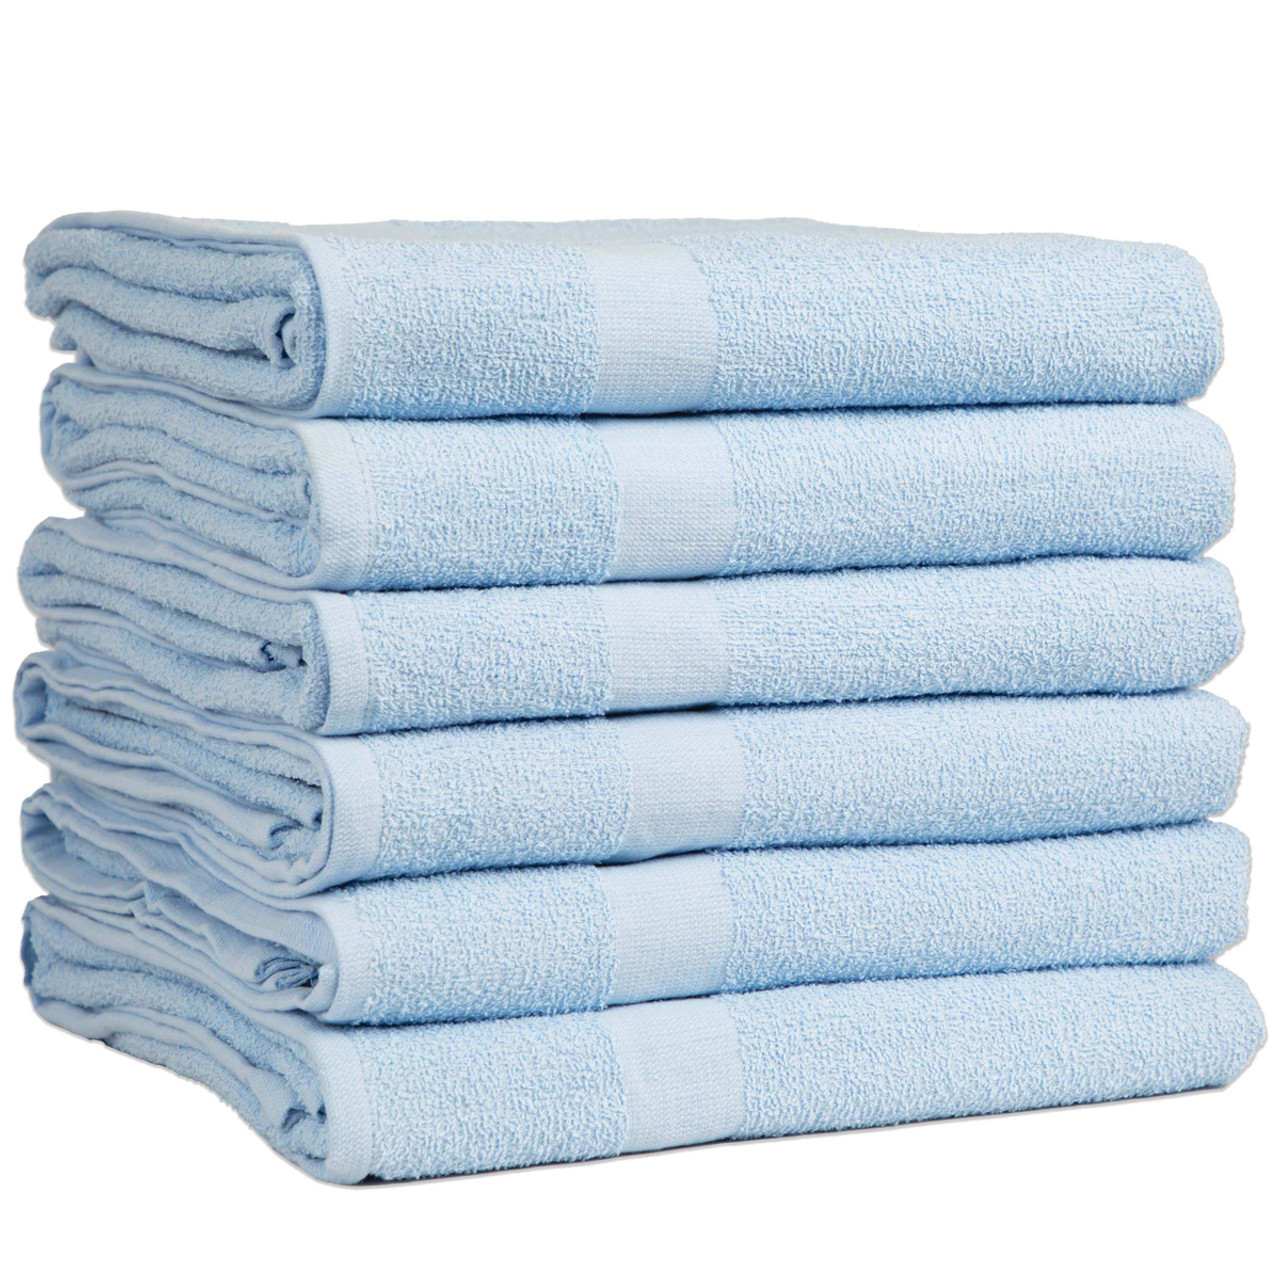 Towels and bath towels in blue CARRARA Naxos terry cloth